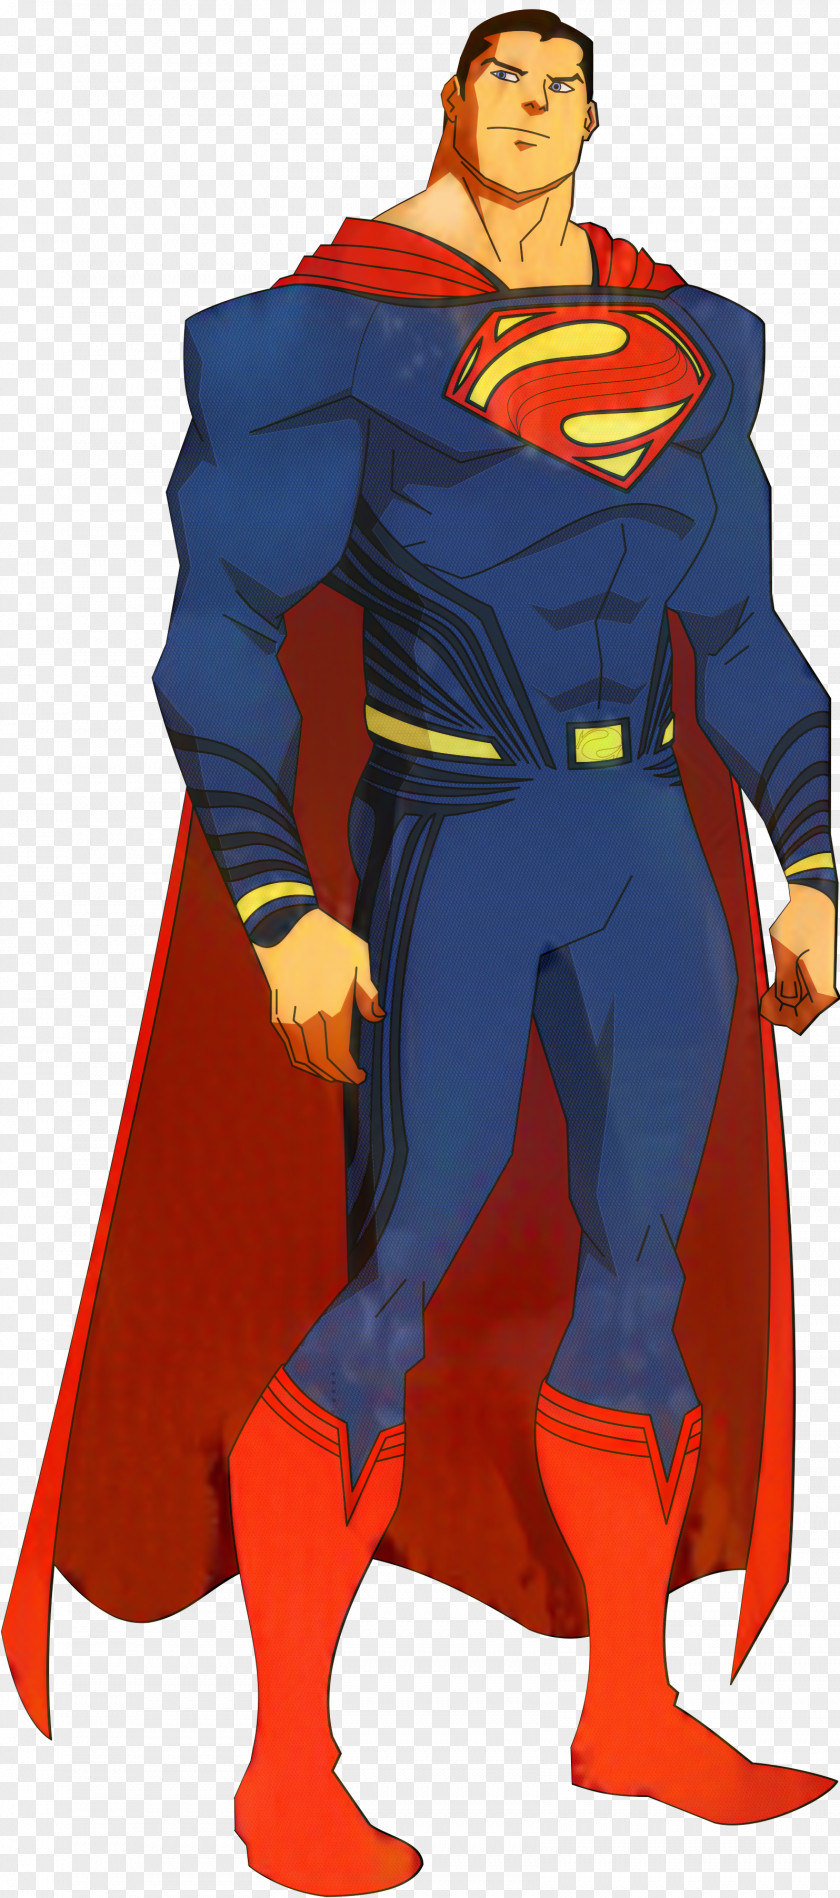 Superman Costume Outerwear Illustration Cartoon PNG